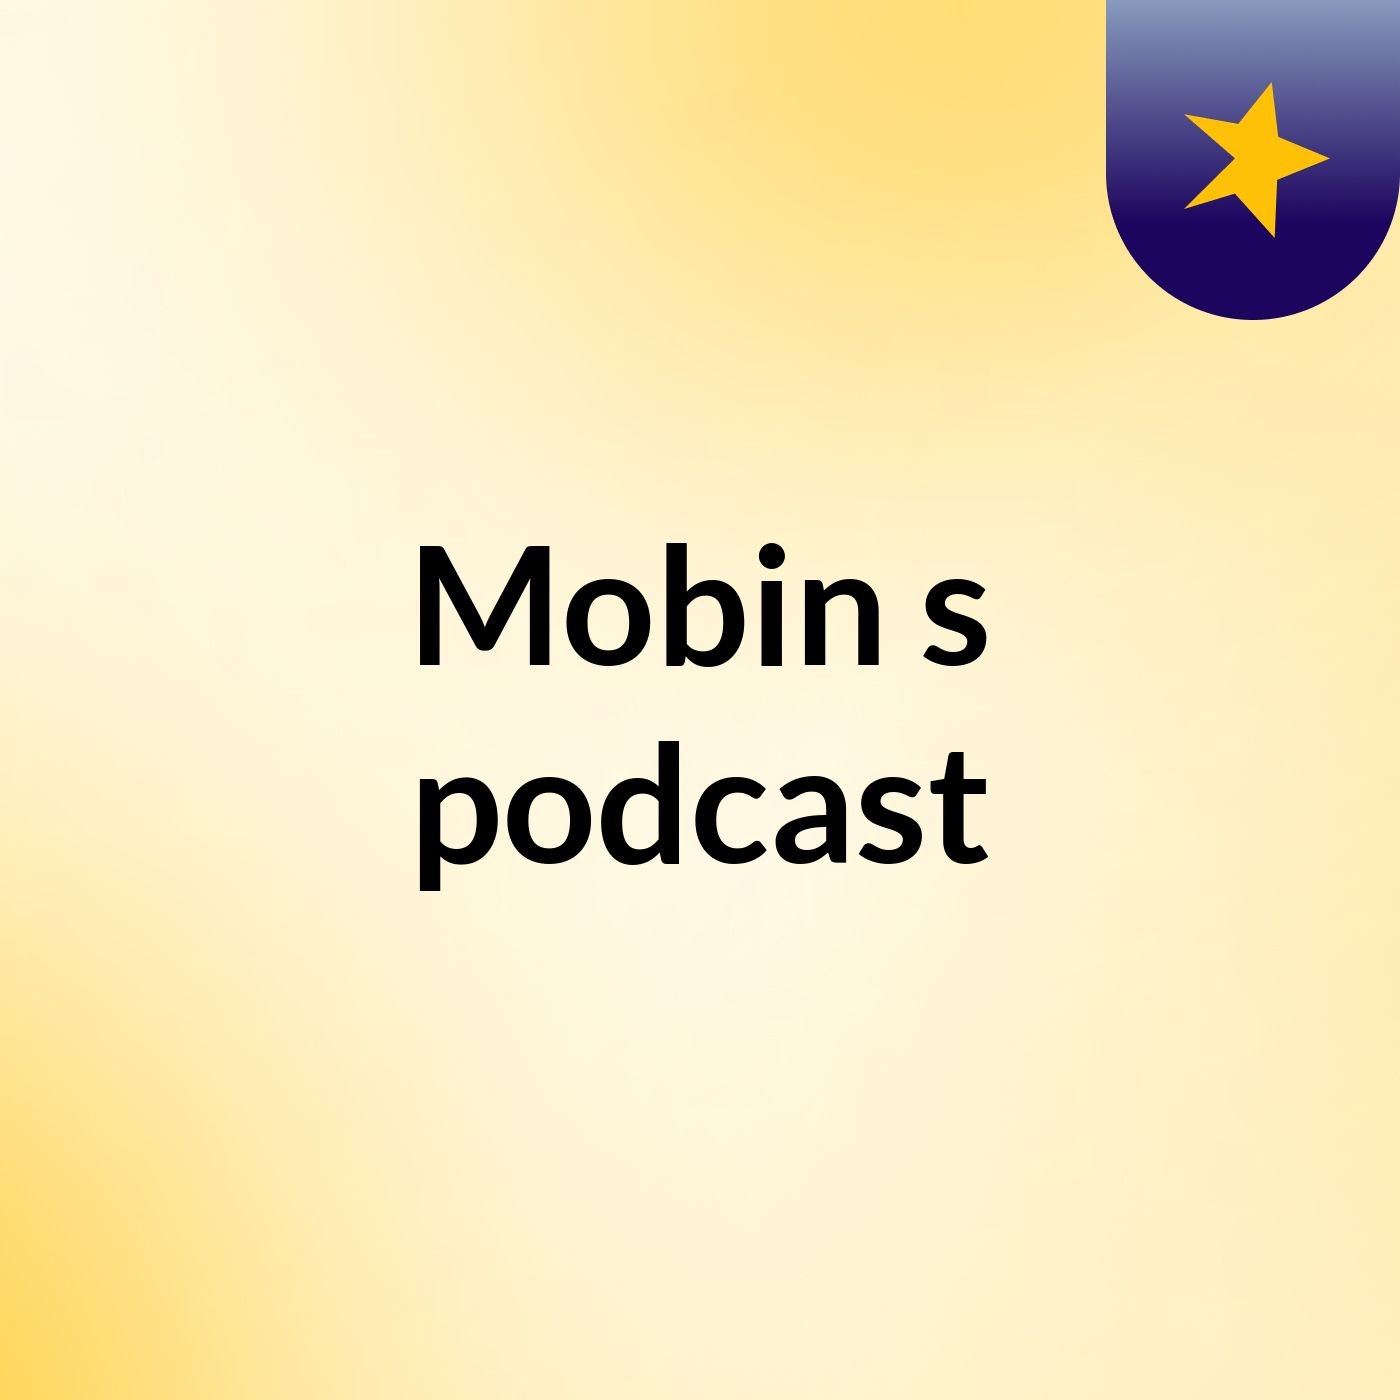 Mobin's podcast